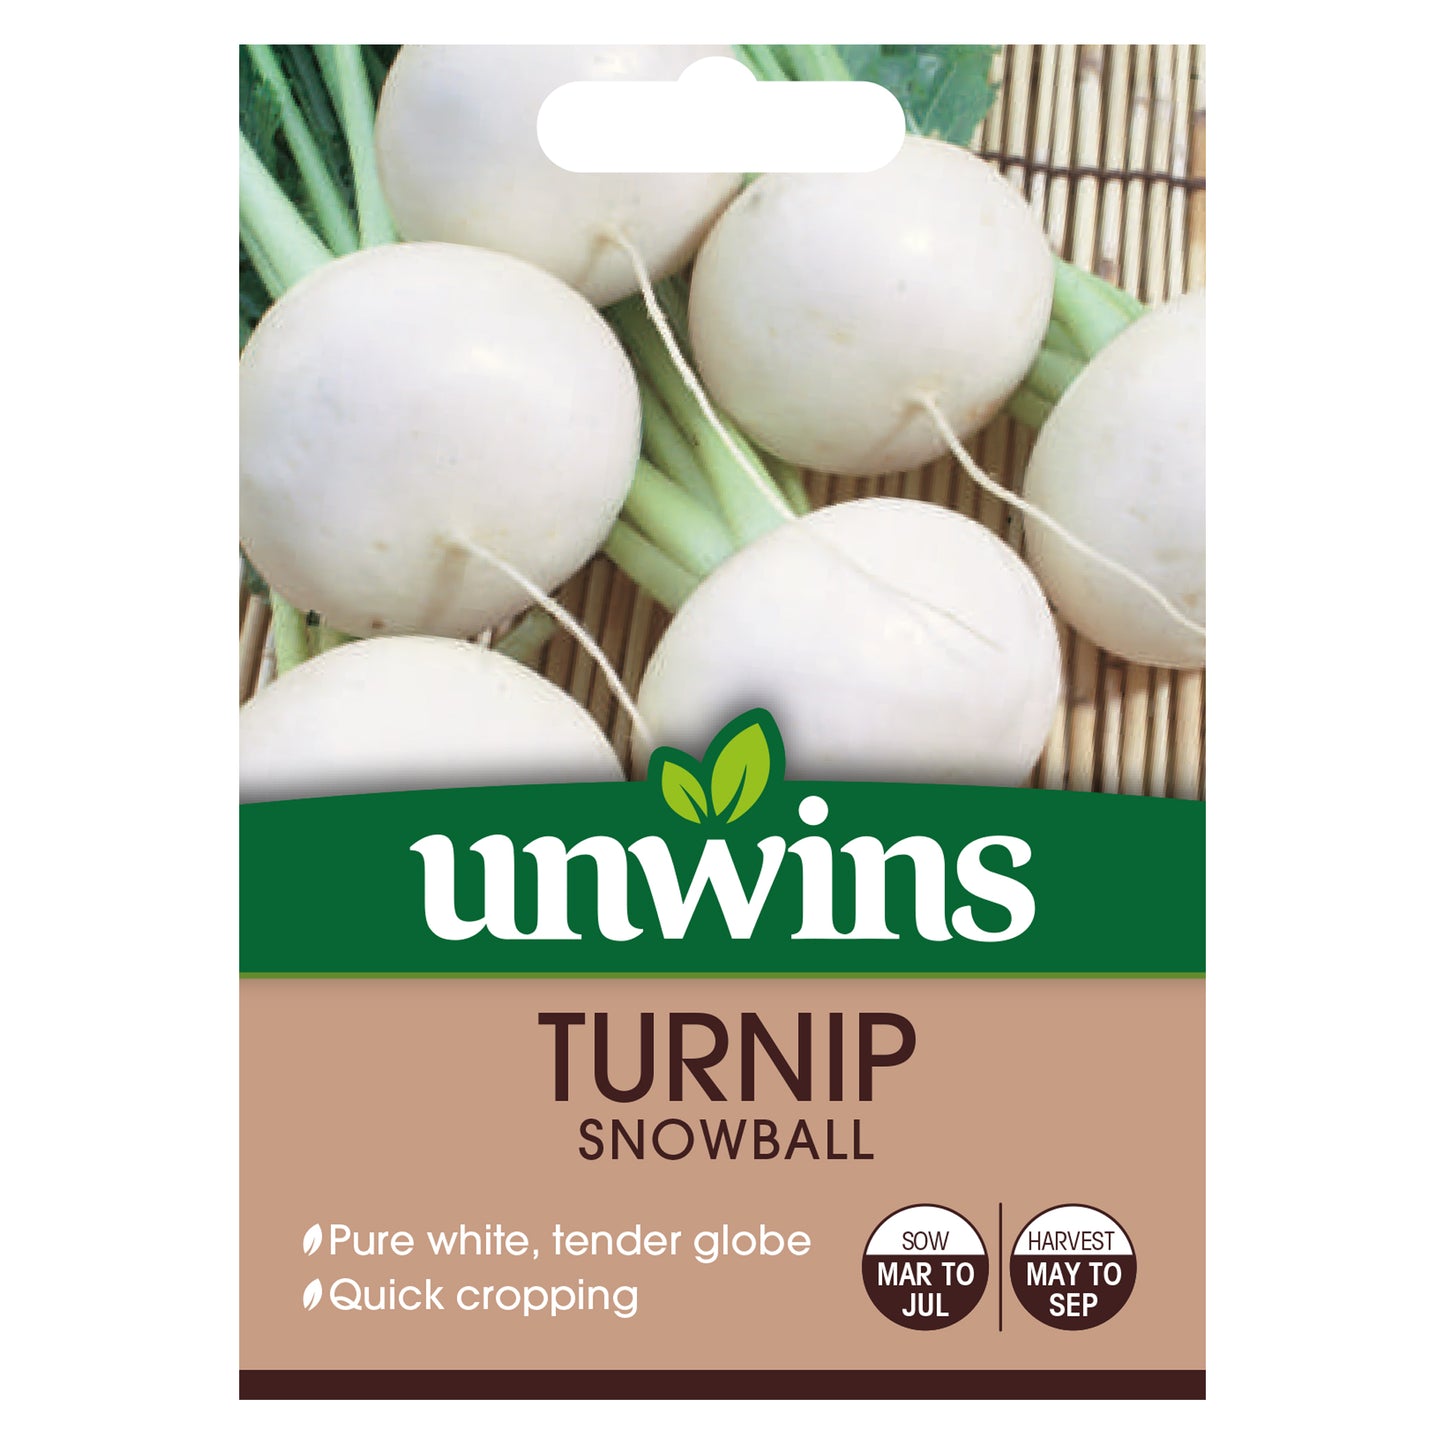 Unwins Turnip Snowball Seeds front